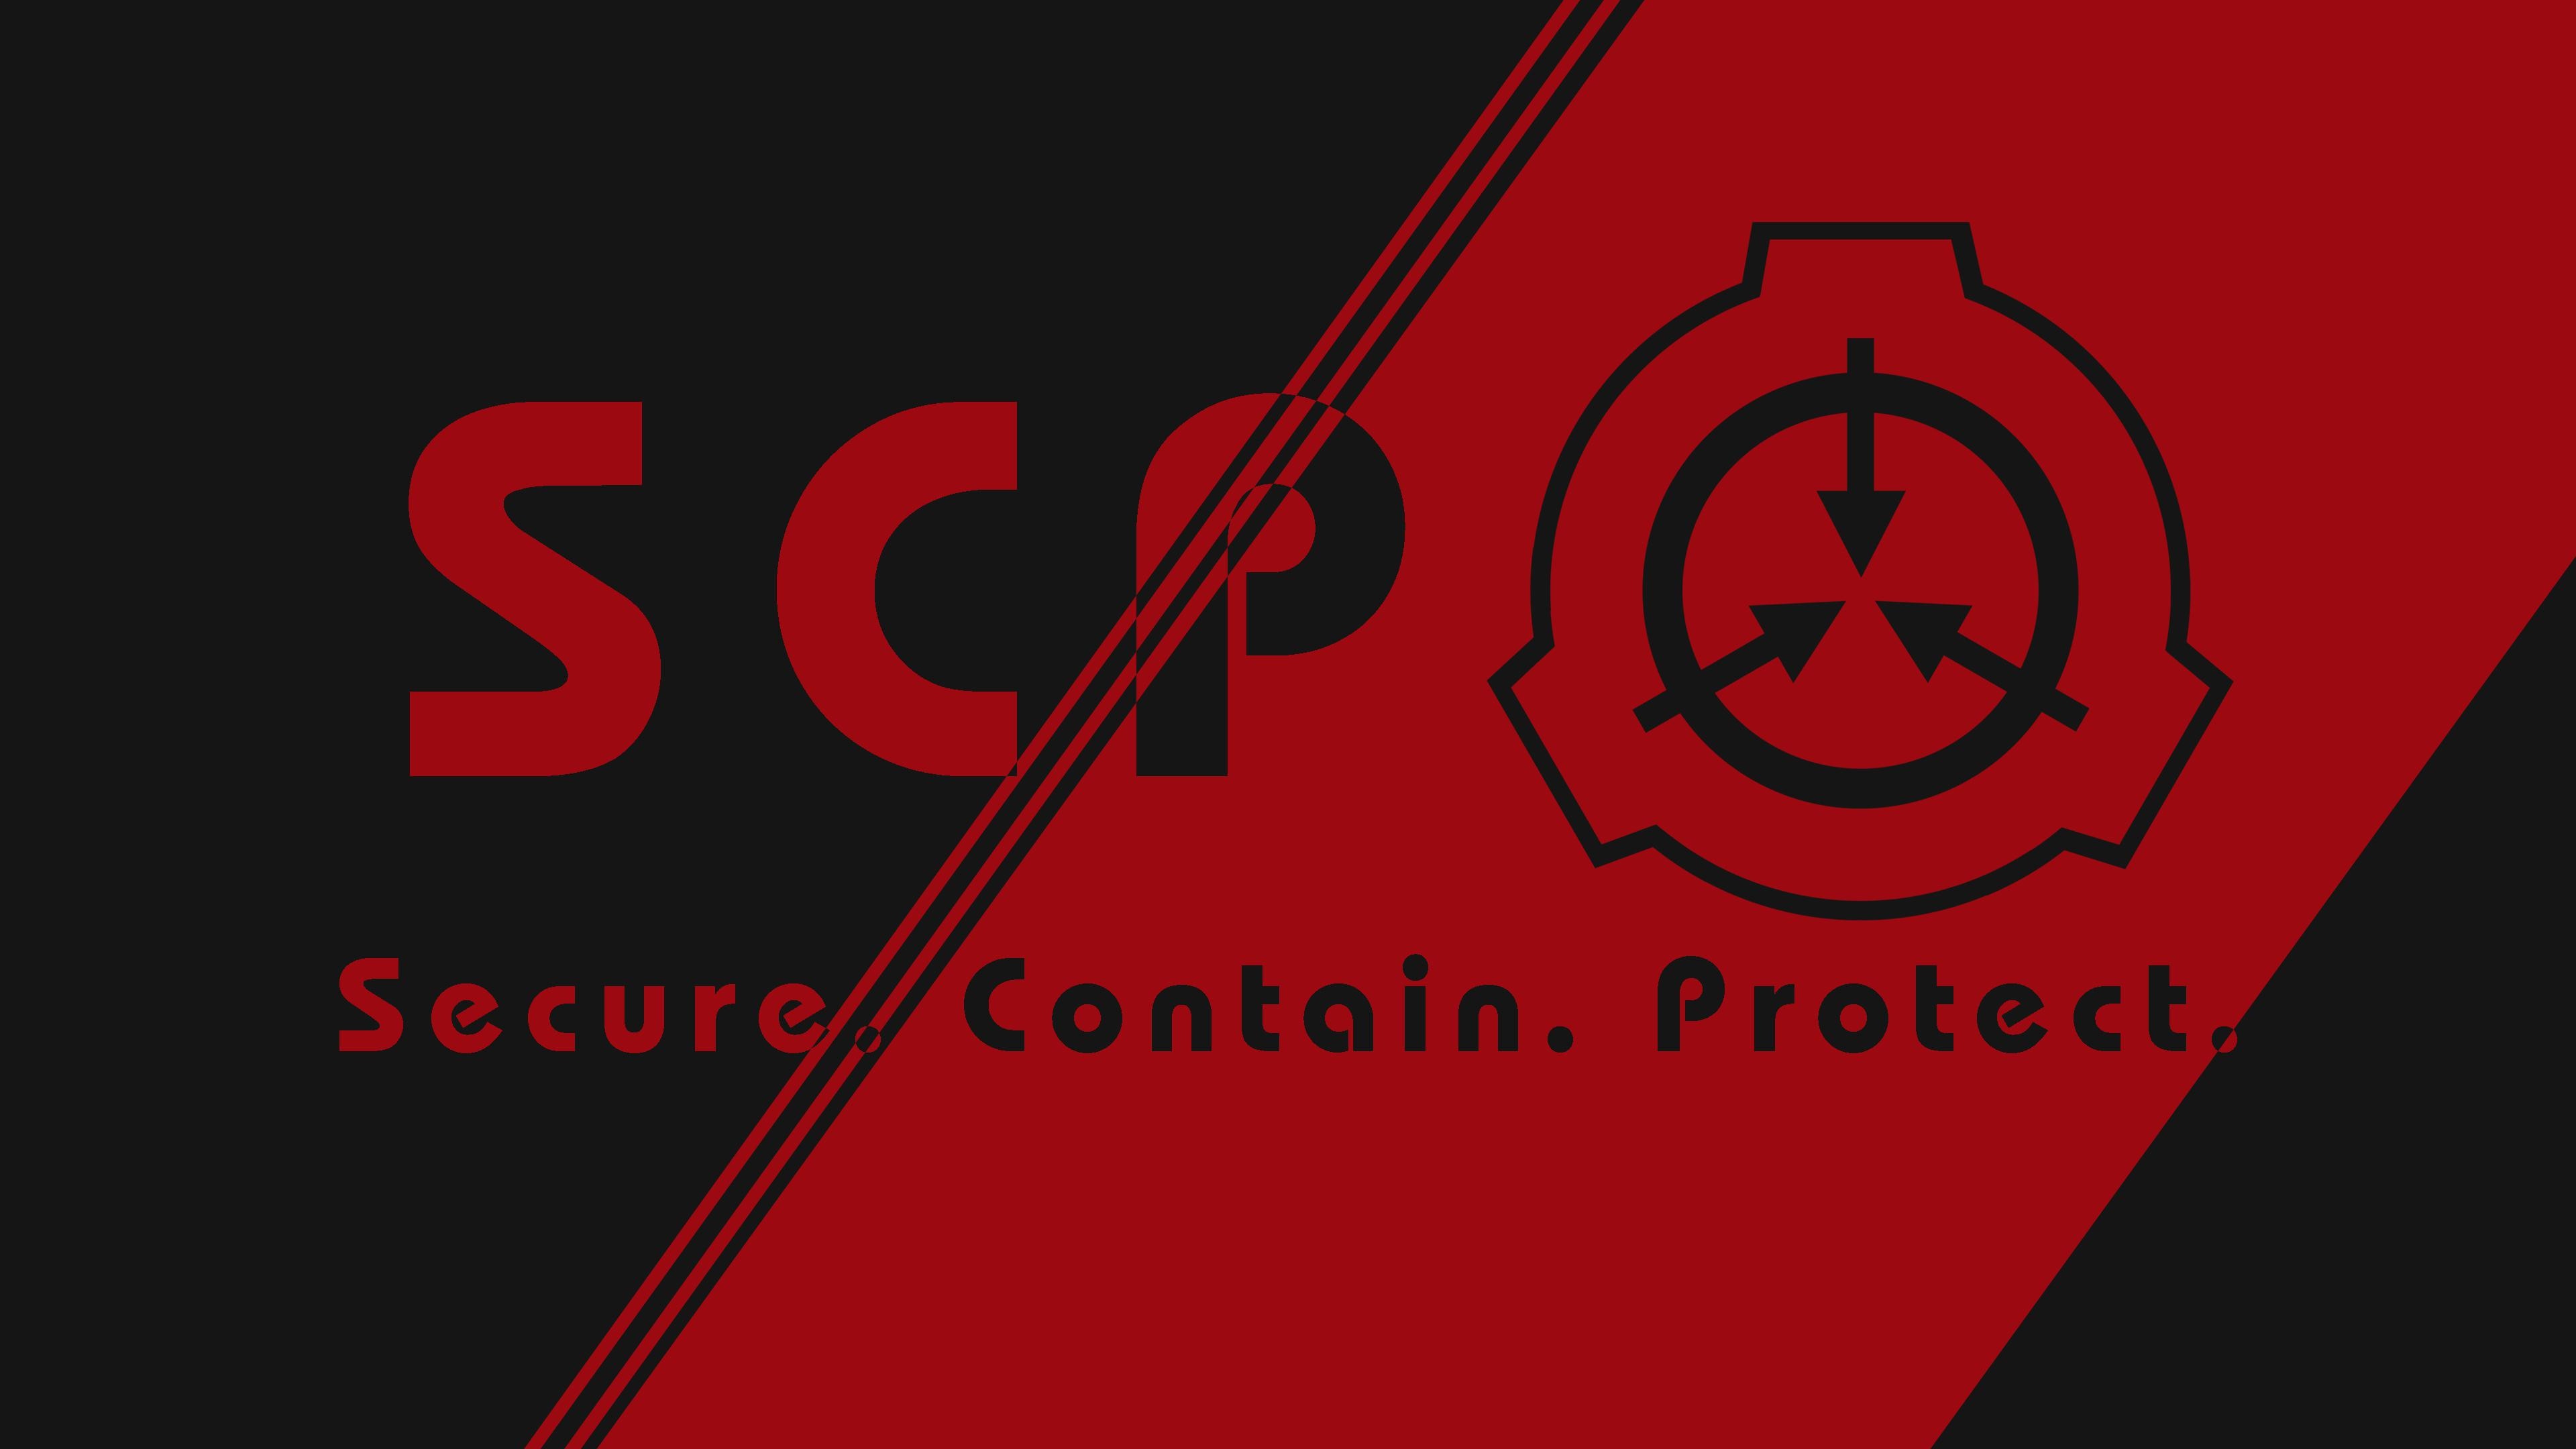 Steam Workshop::SCP Containment Breach - SCP-079